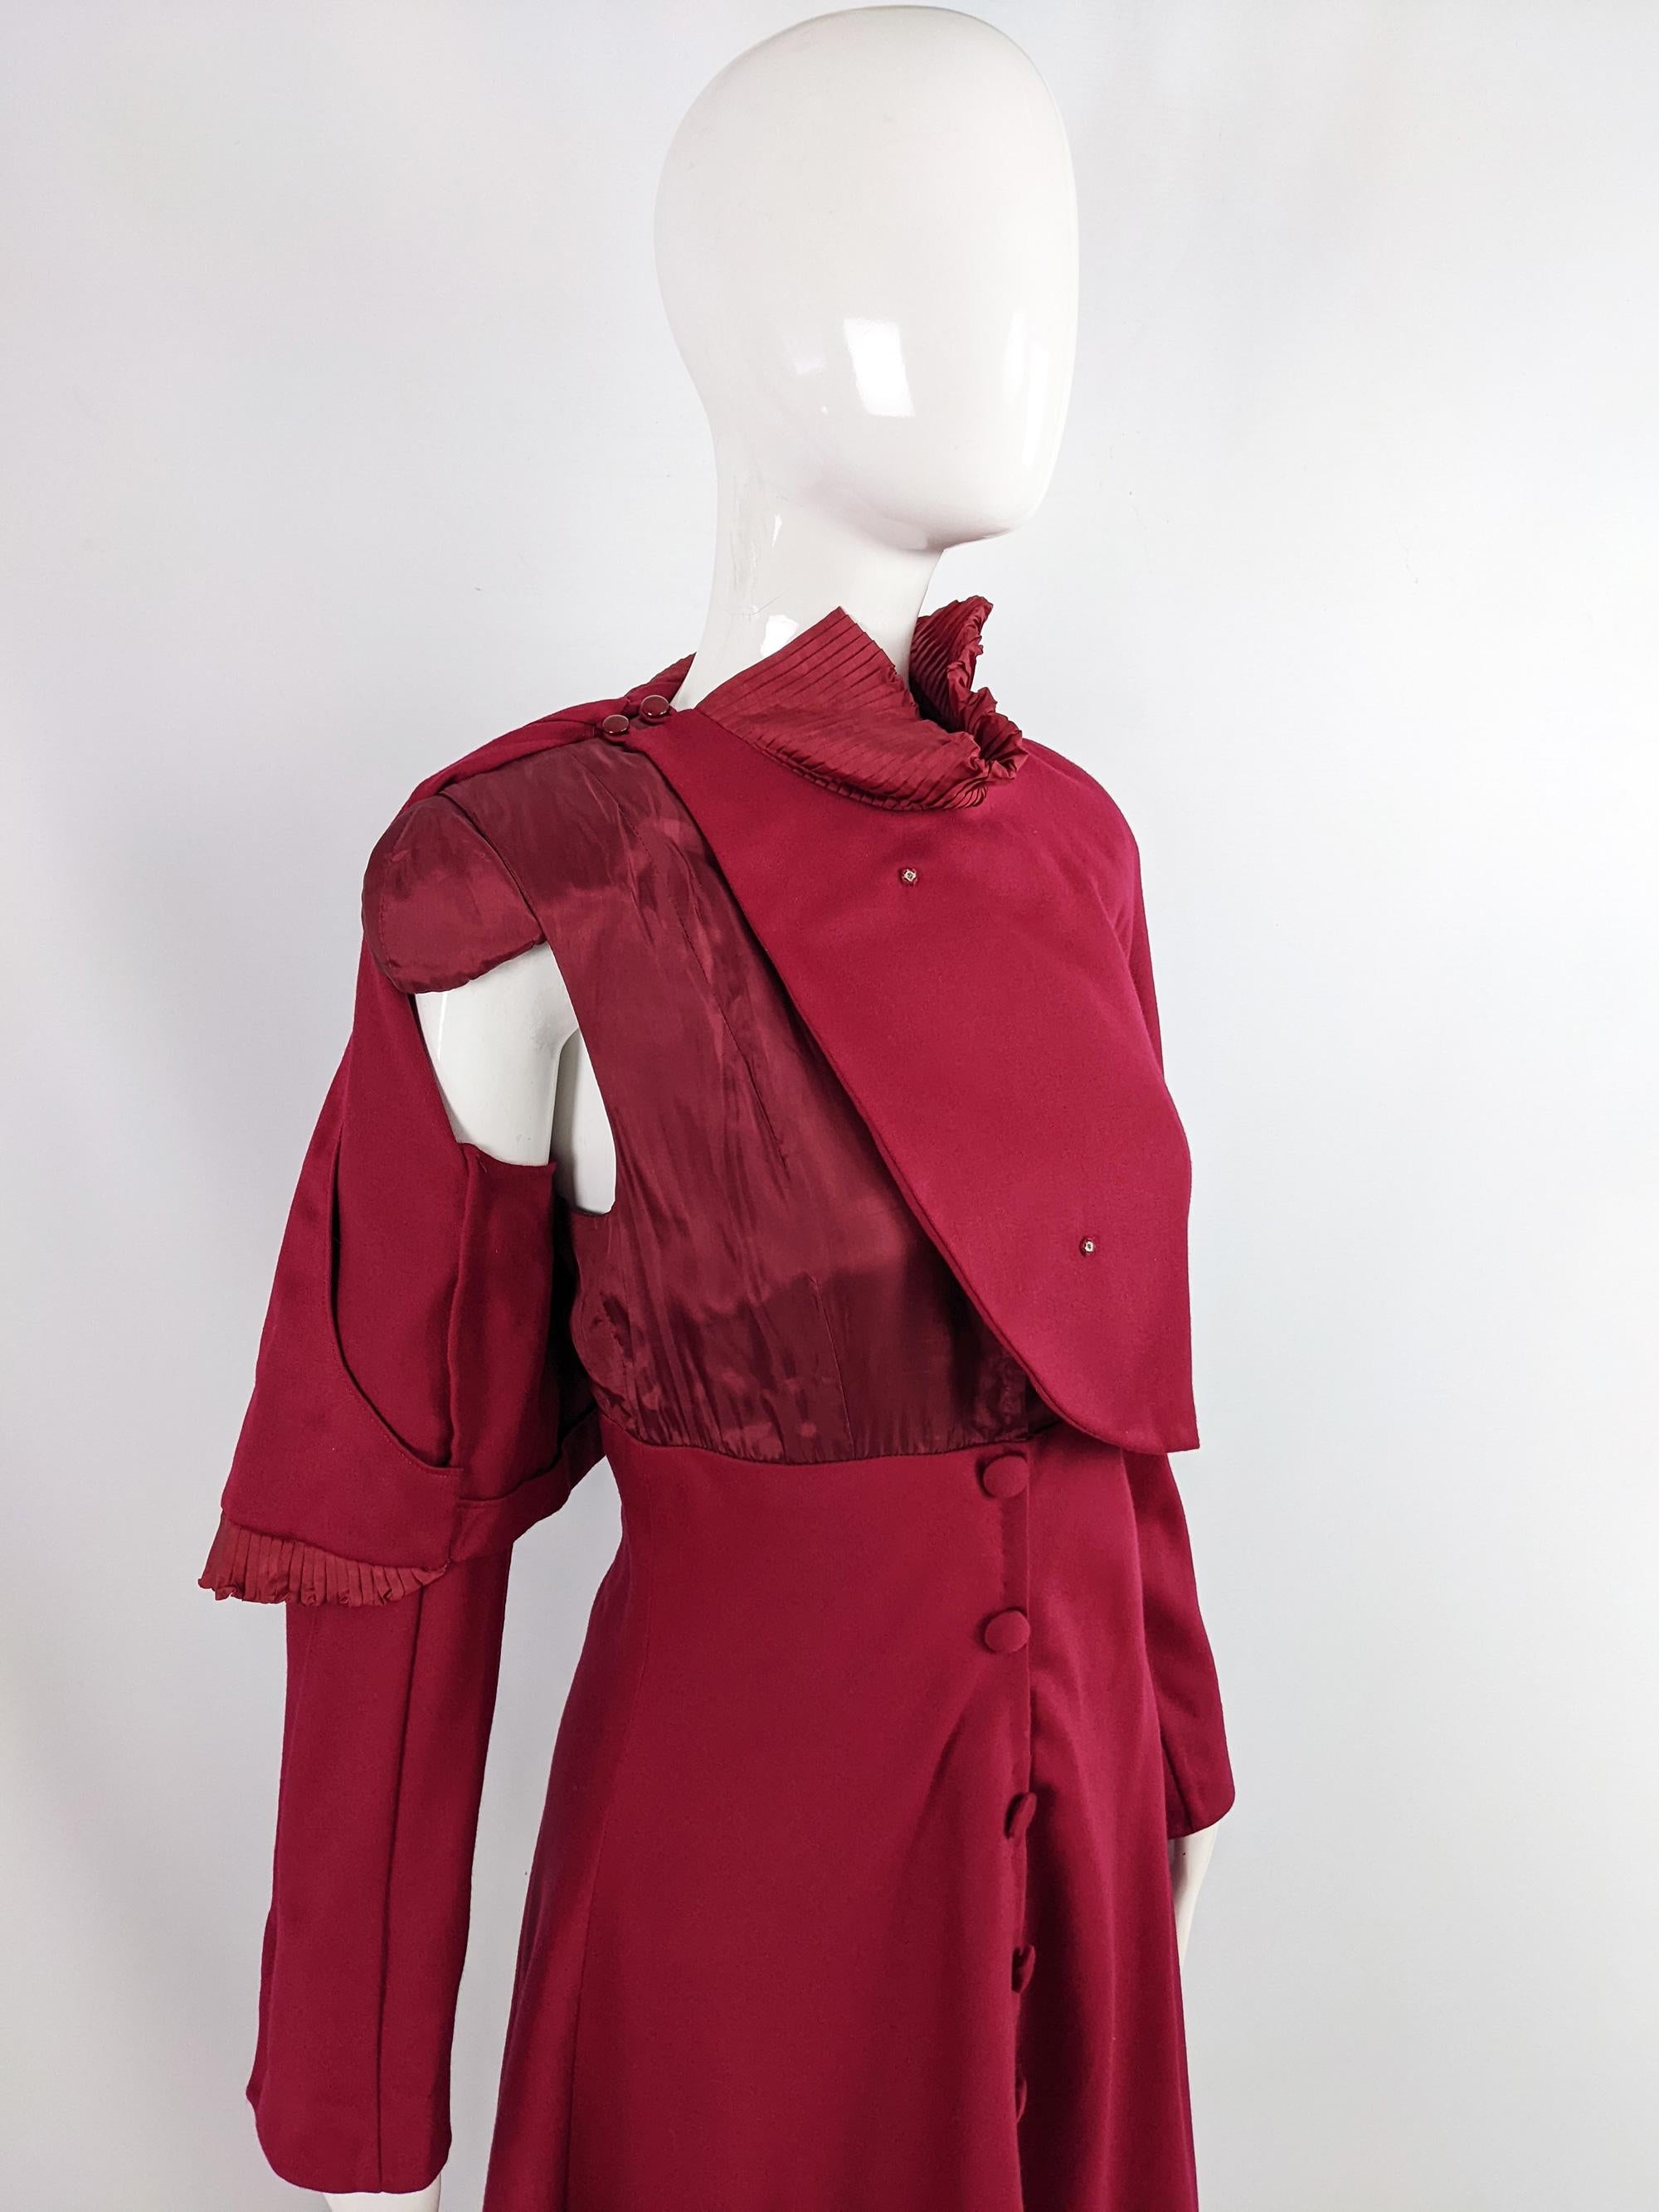 Women's Eli Colaj Vintage Wine Red Italian Long Sleeve Wool Dress with Ruffle Collar